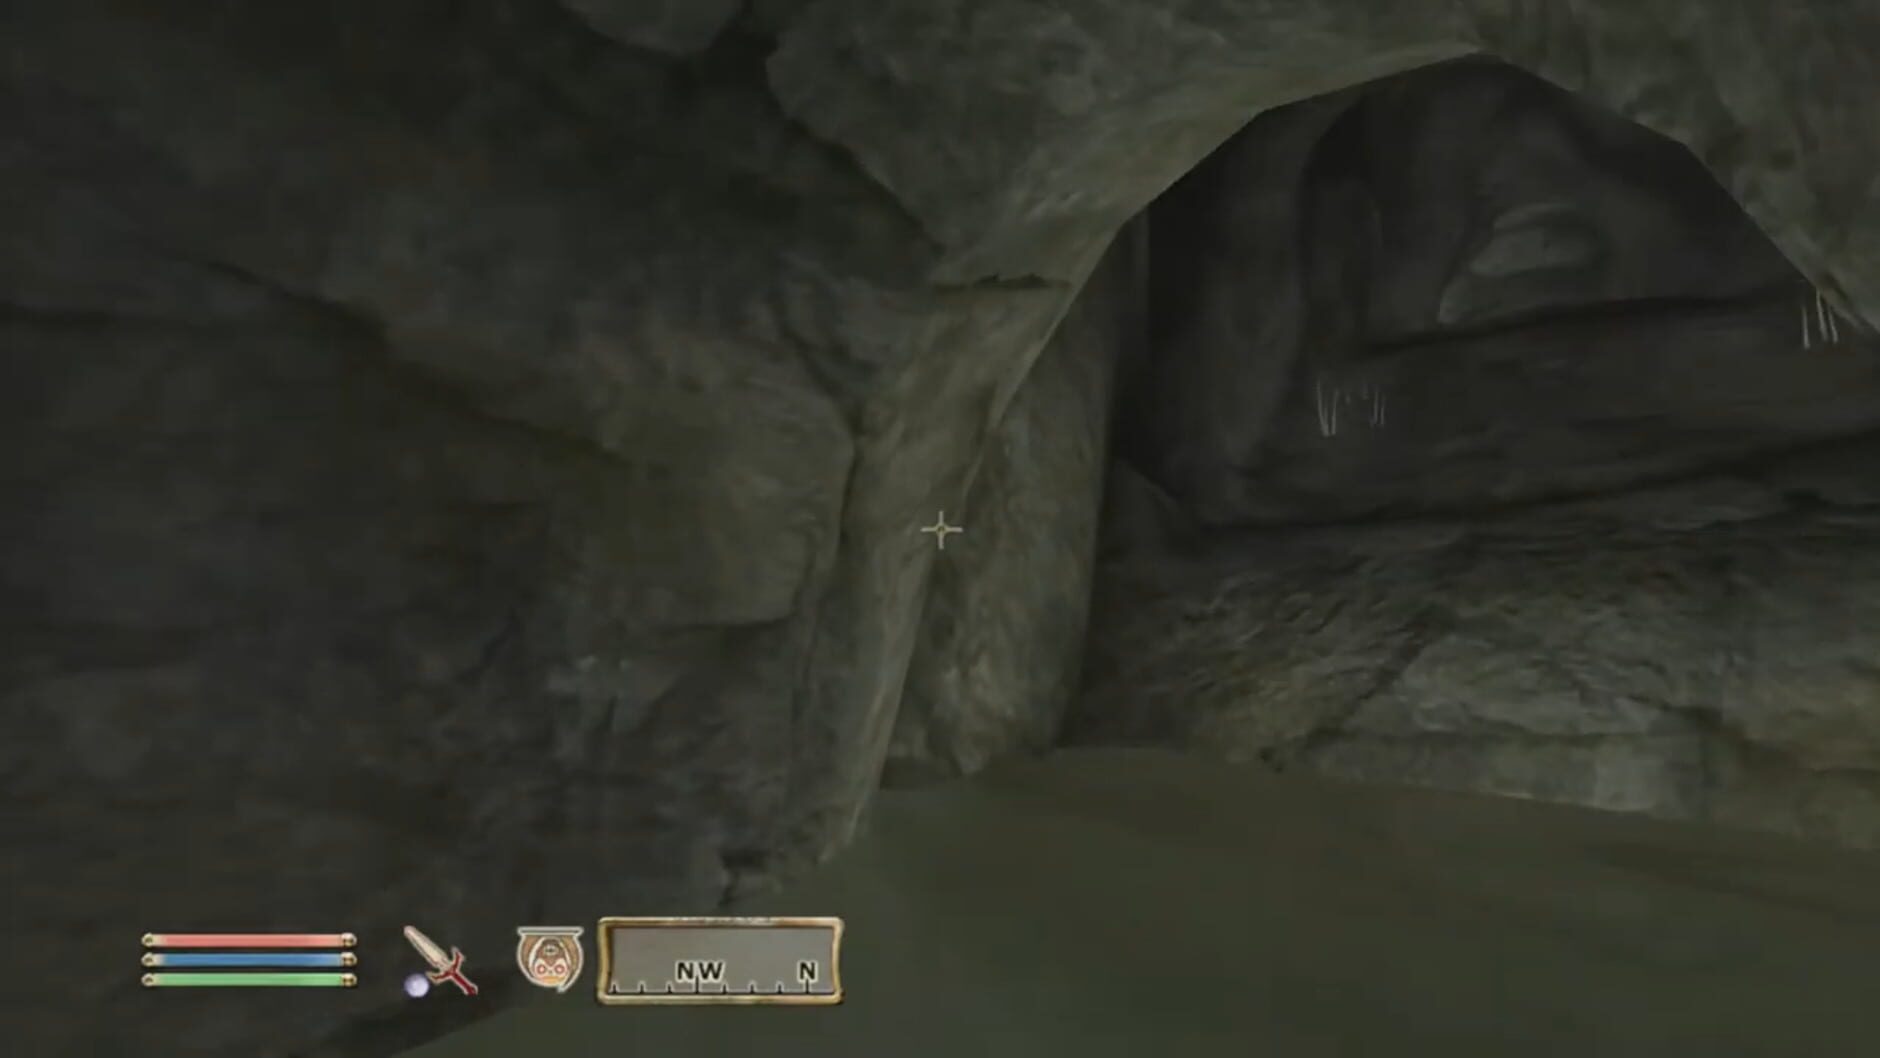 Screenshot for The Elder Scrolls IV: Oblivion - The Thieves Den